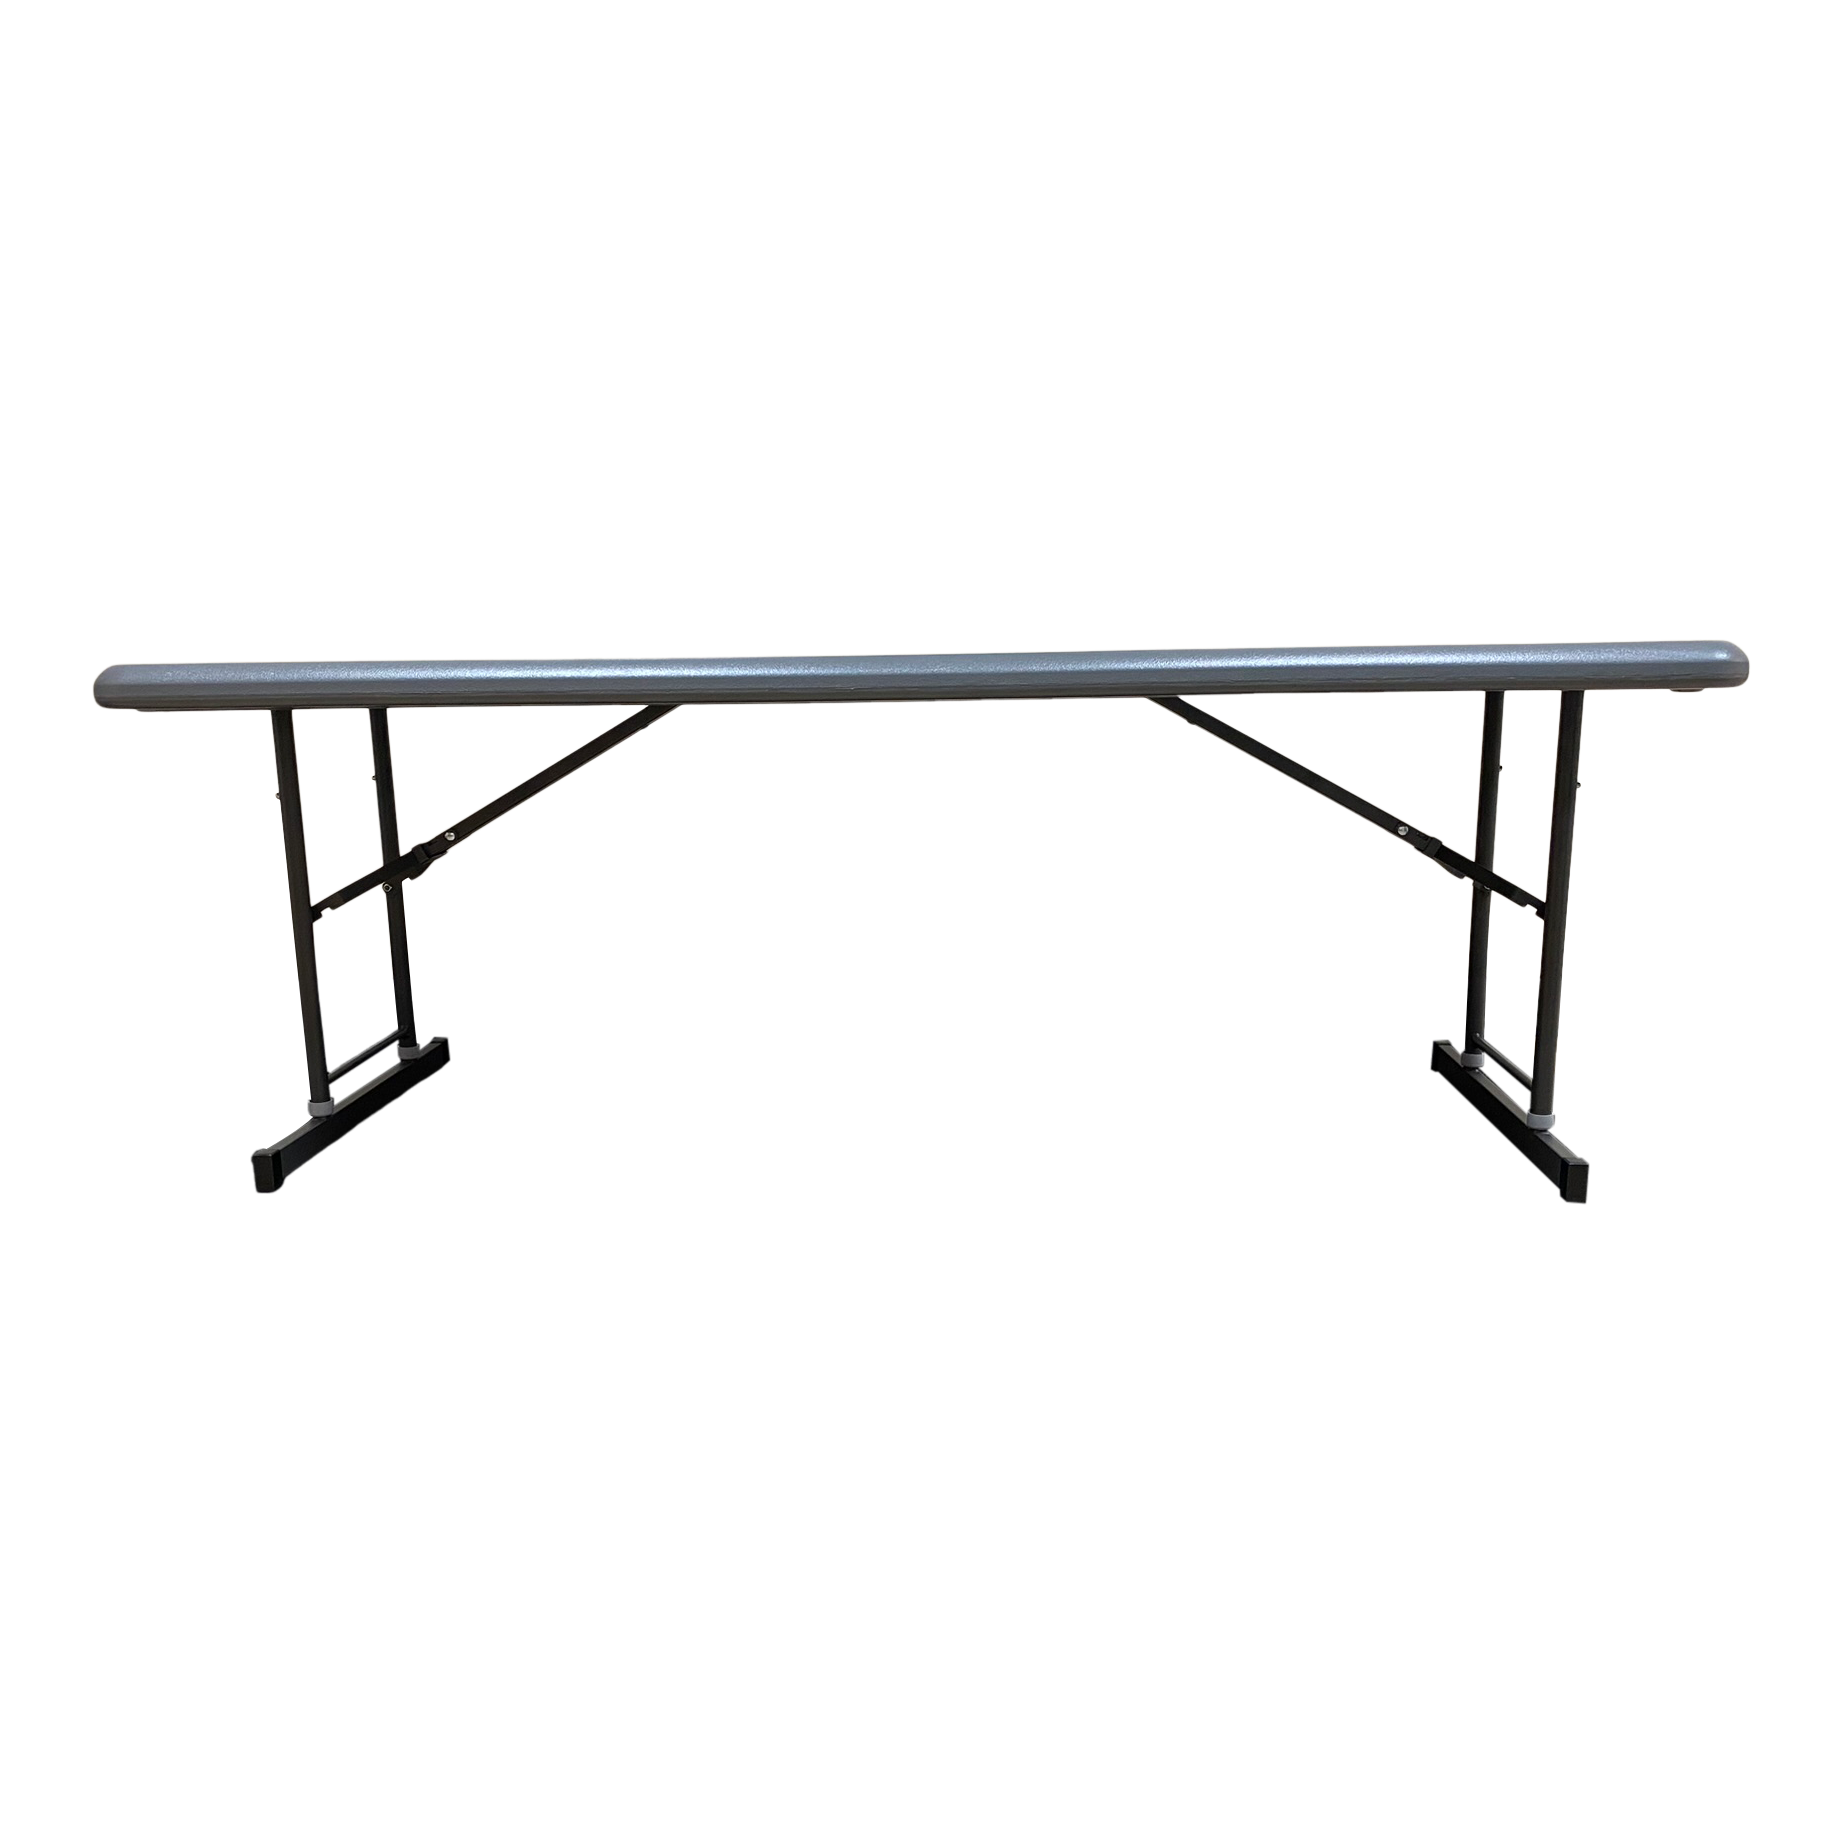 A charcoal six-foot adjustable folding table.